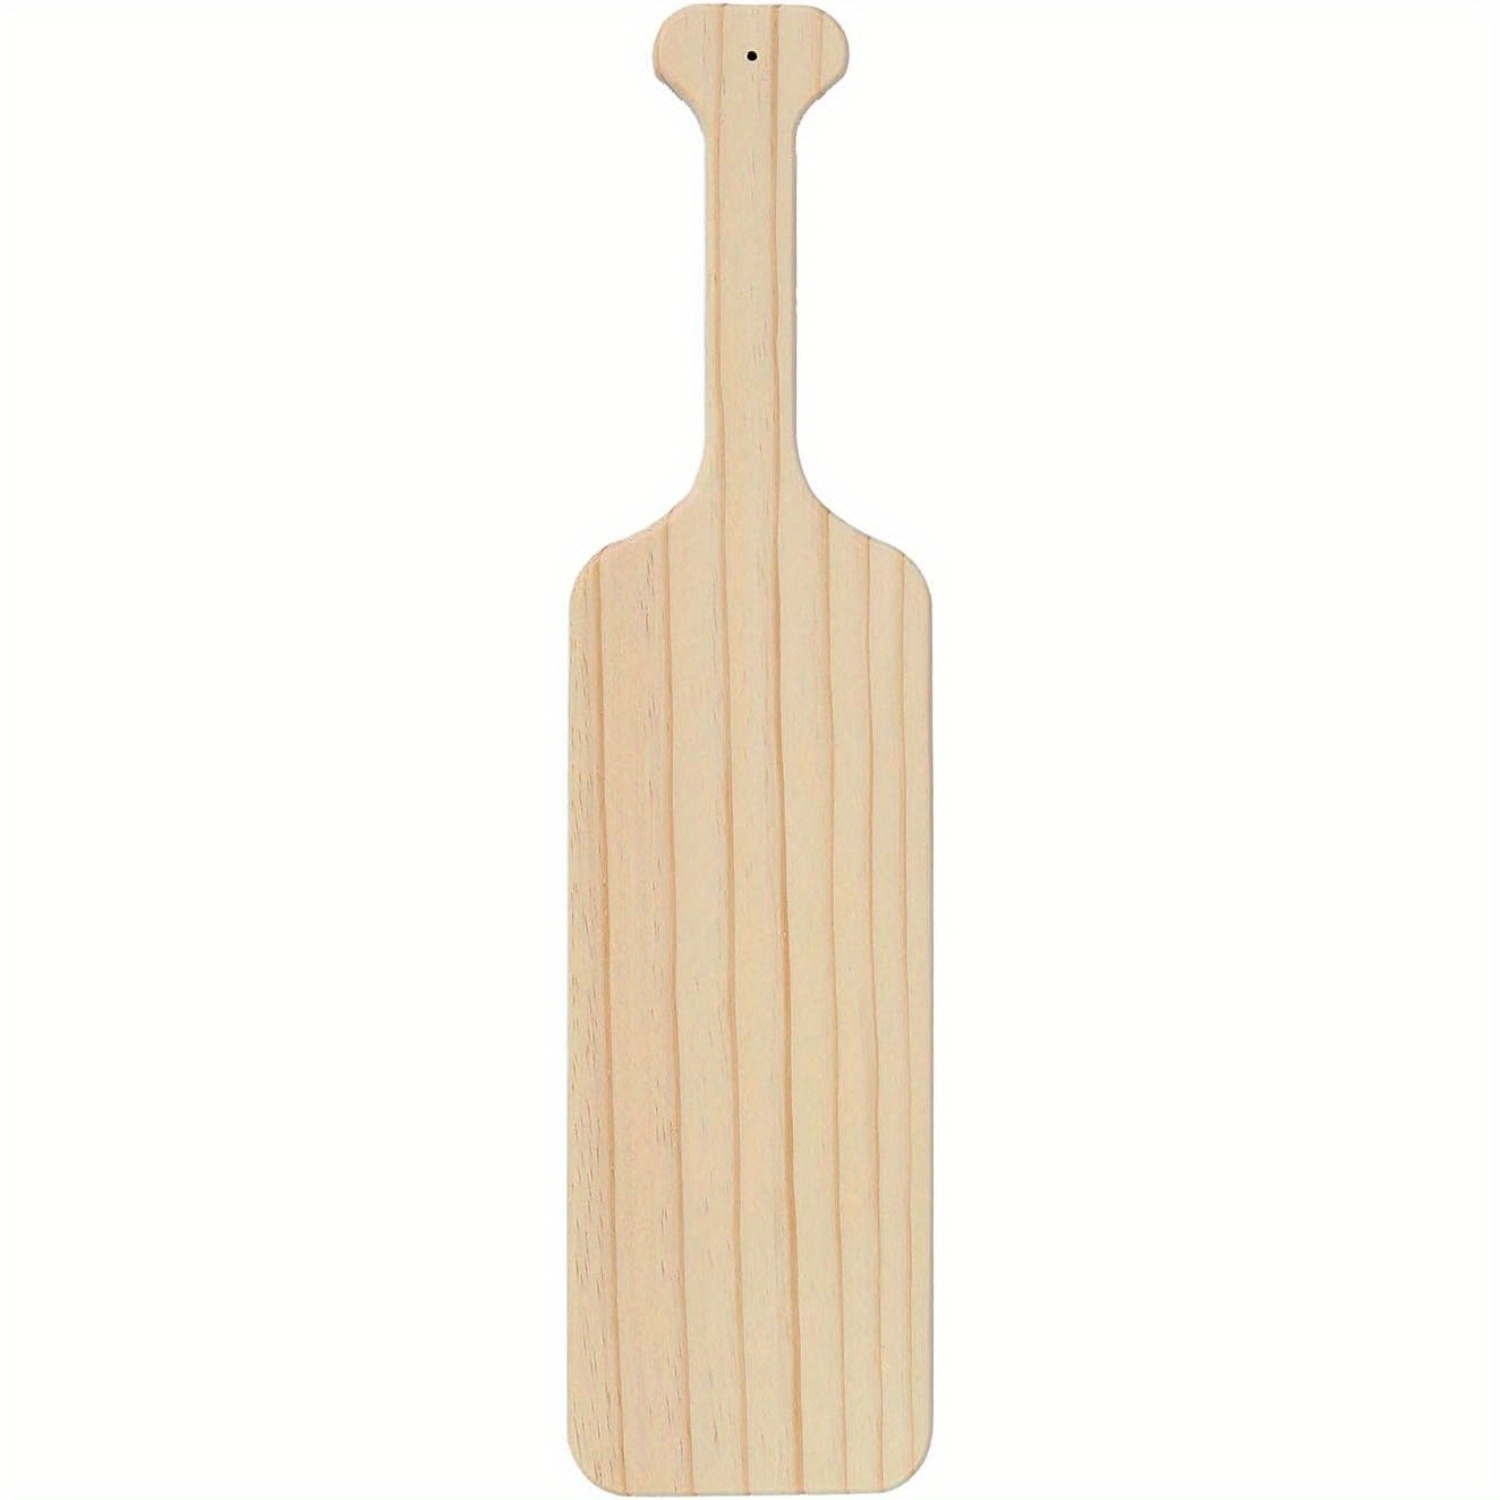 VENESUN 18inch Greek Sorority Paddle, Solid Wooden Fraternity Paddle,  Unfinished Pine Wood Paddle, Frat Paddle